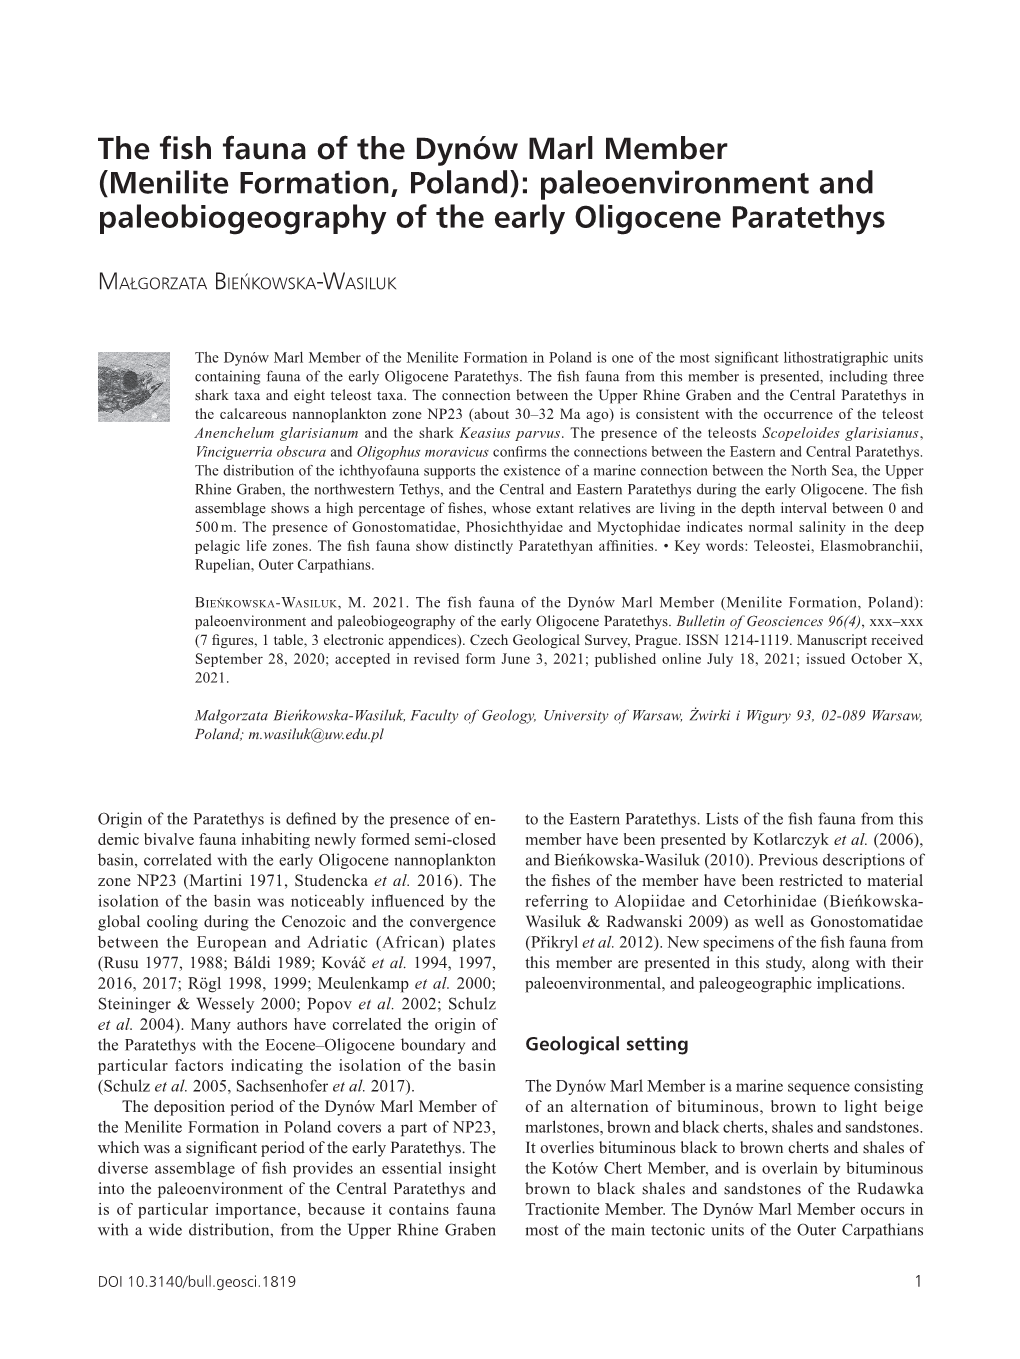 The Fish Fauna of the Dynów Marl Member (Menilite Formation, Poland): Paleoenvironment and Paleobiogeography of the Early Oligocene Paratethys